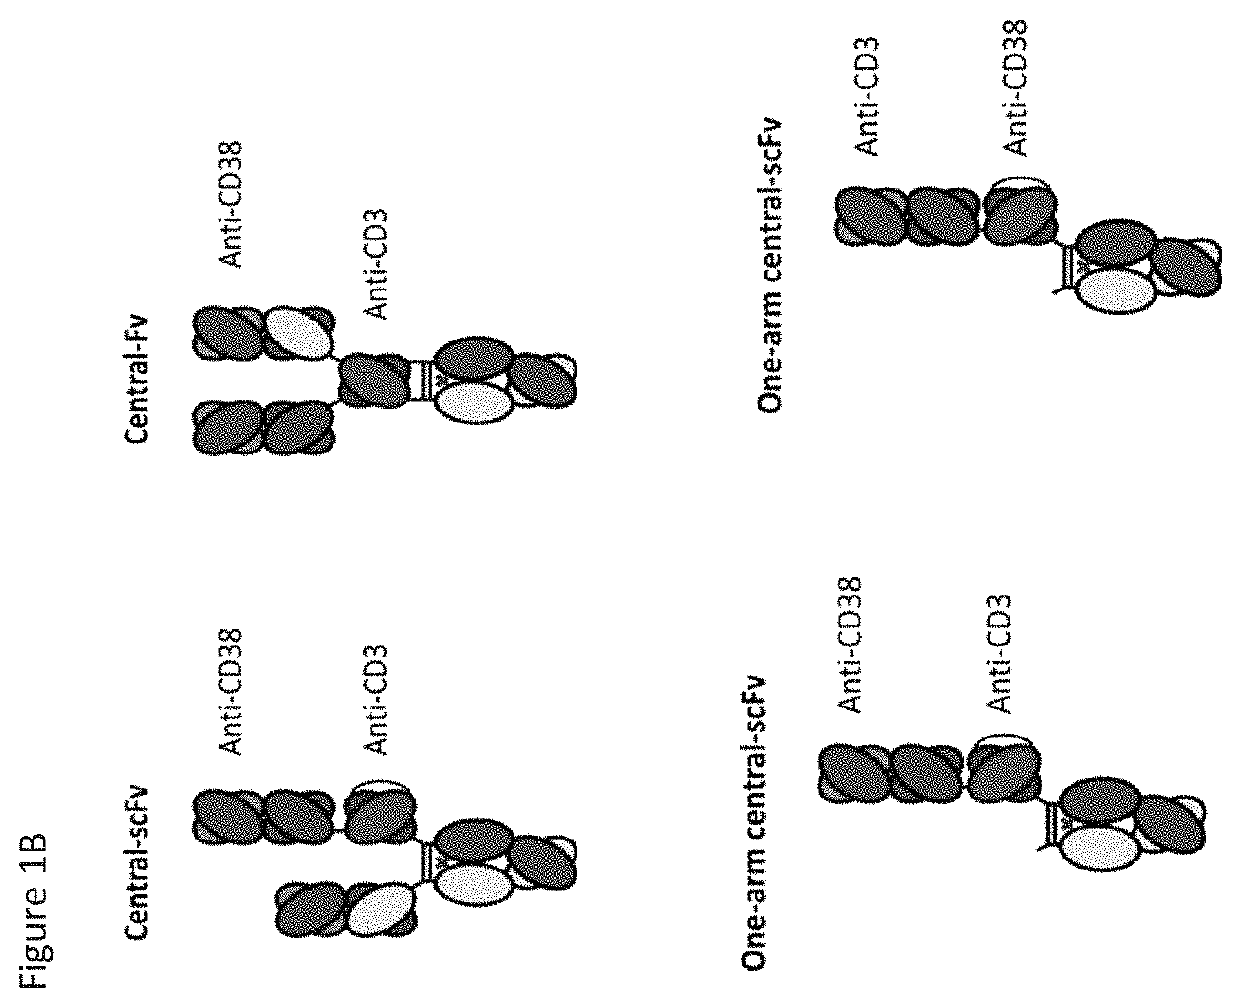 Heterodimeric antibodies that bind CD3 and CD38